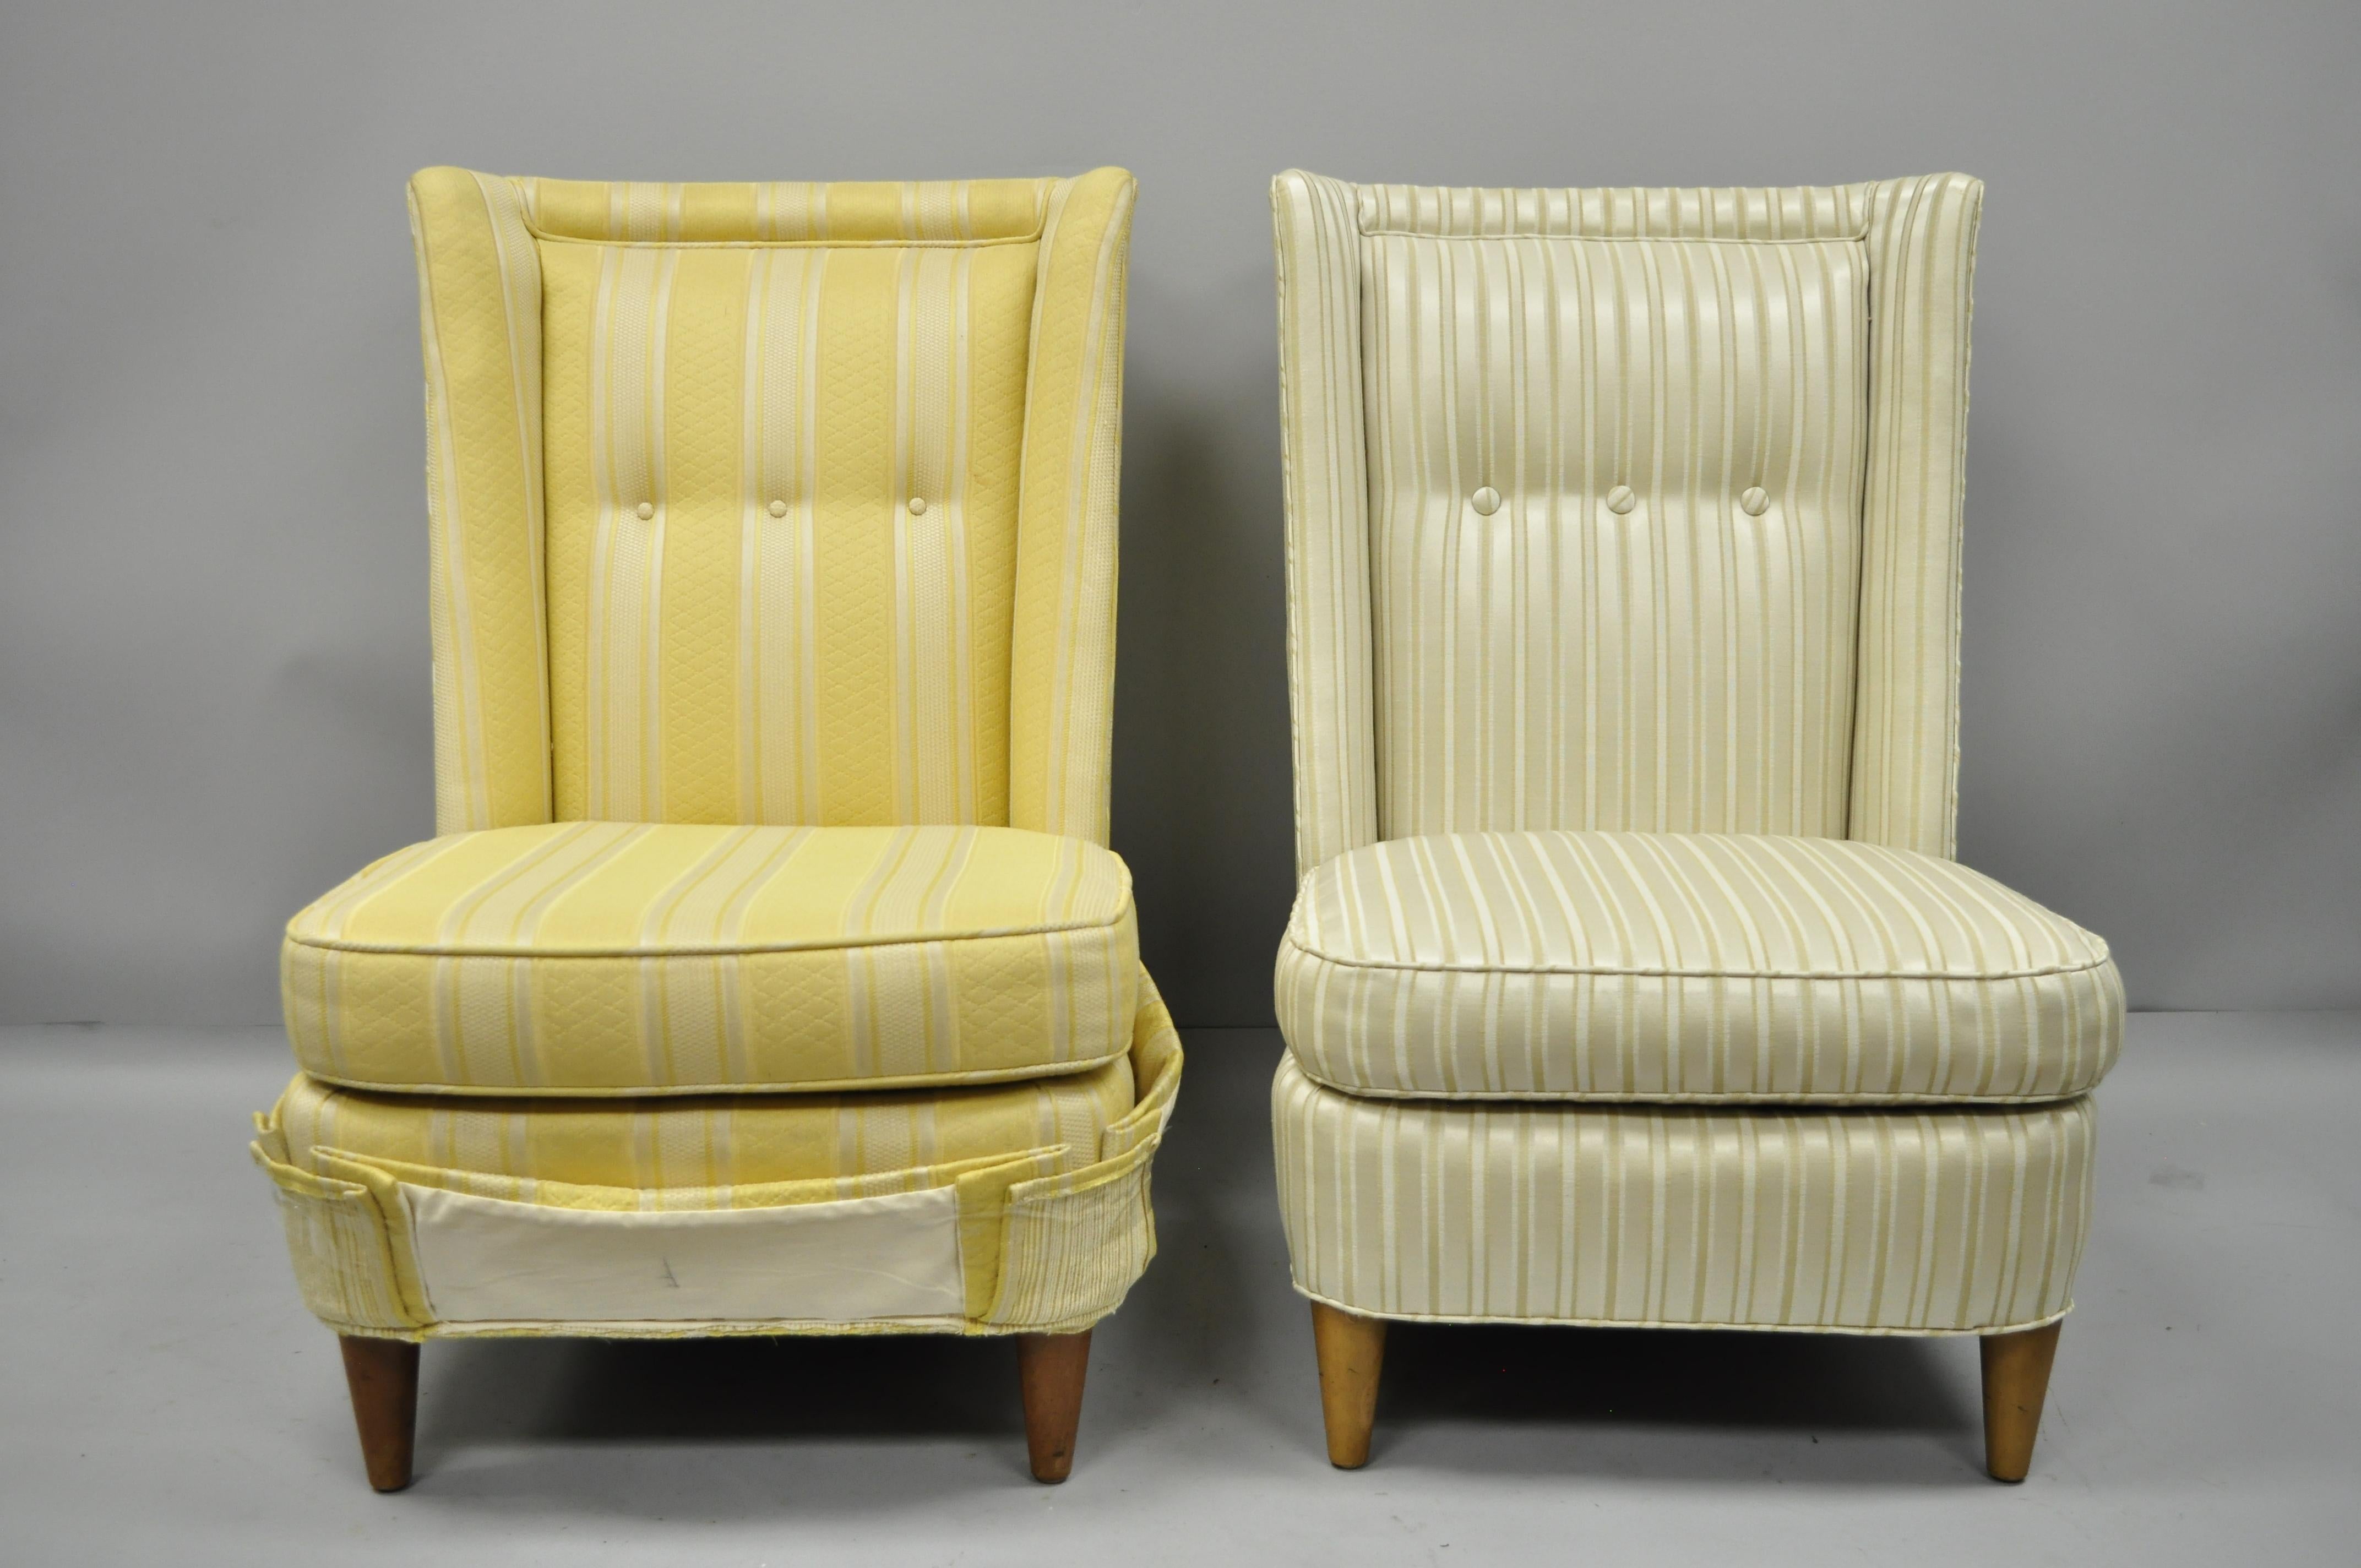 Paul Laszlo Upholstered Slipper Lounge Chair Barrel Back a Pair For Sale 1